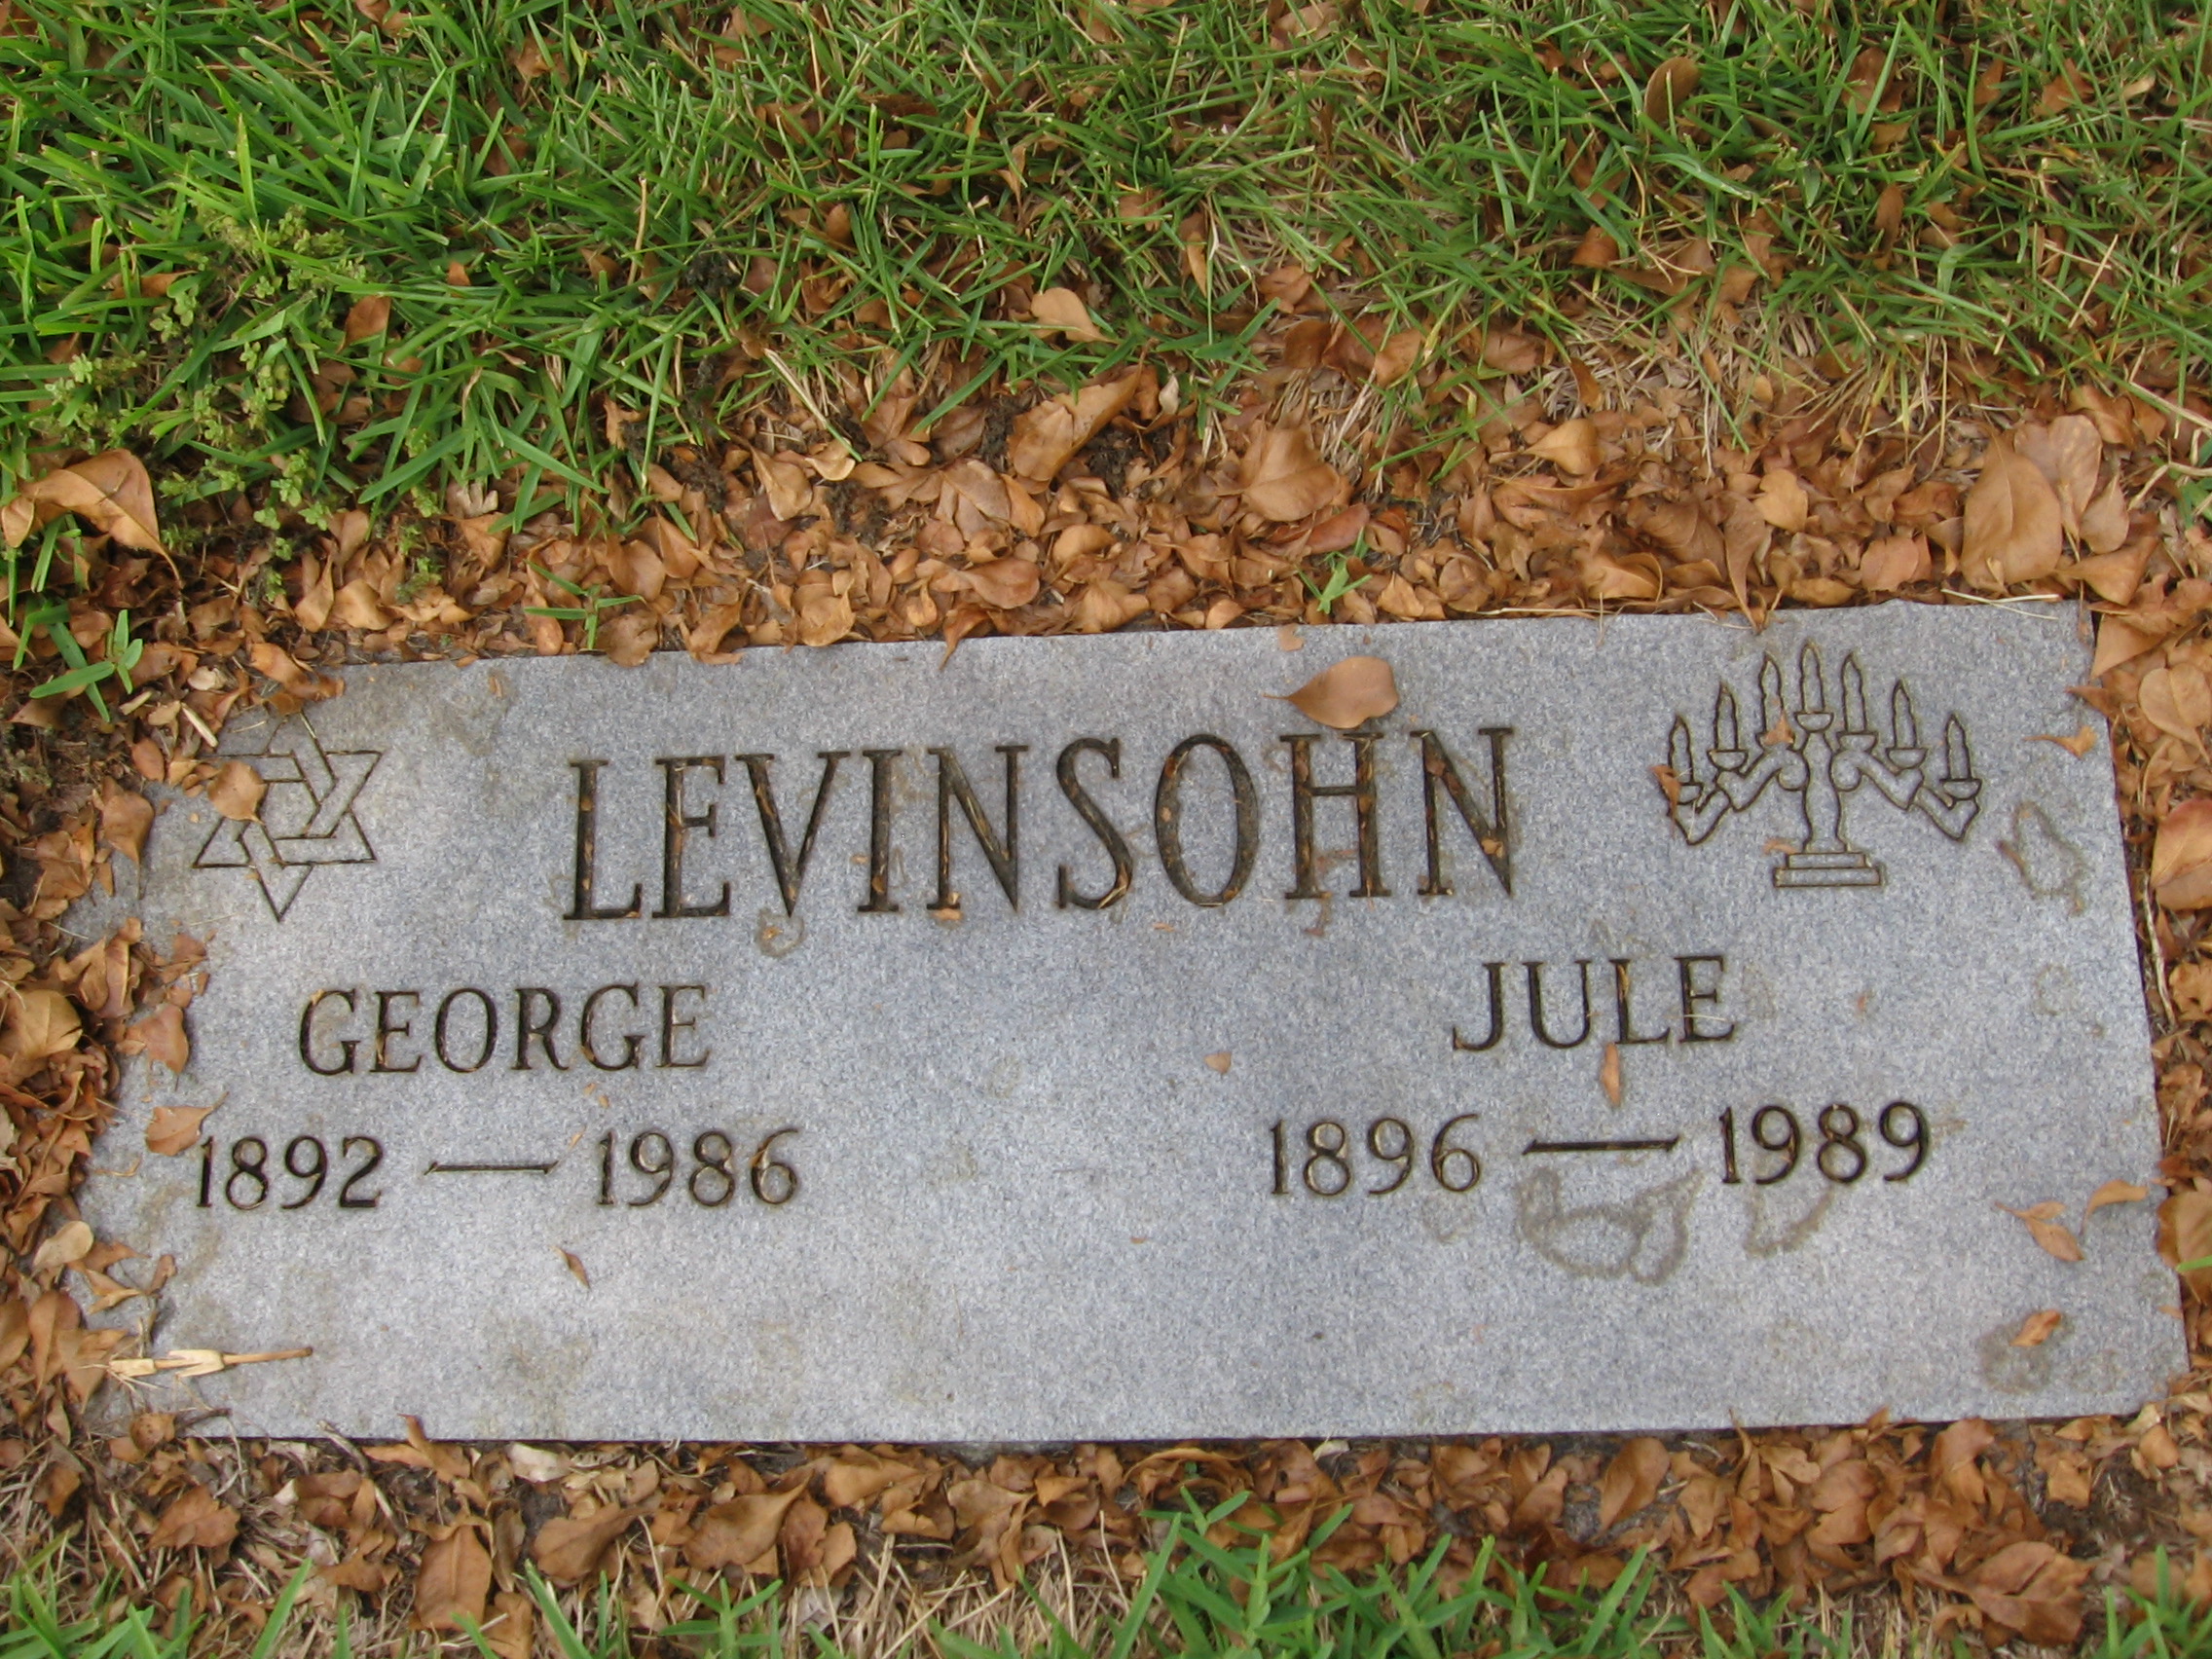 George Levinsohn